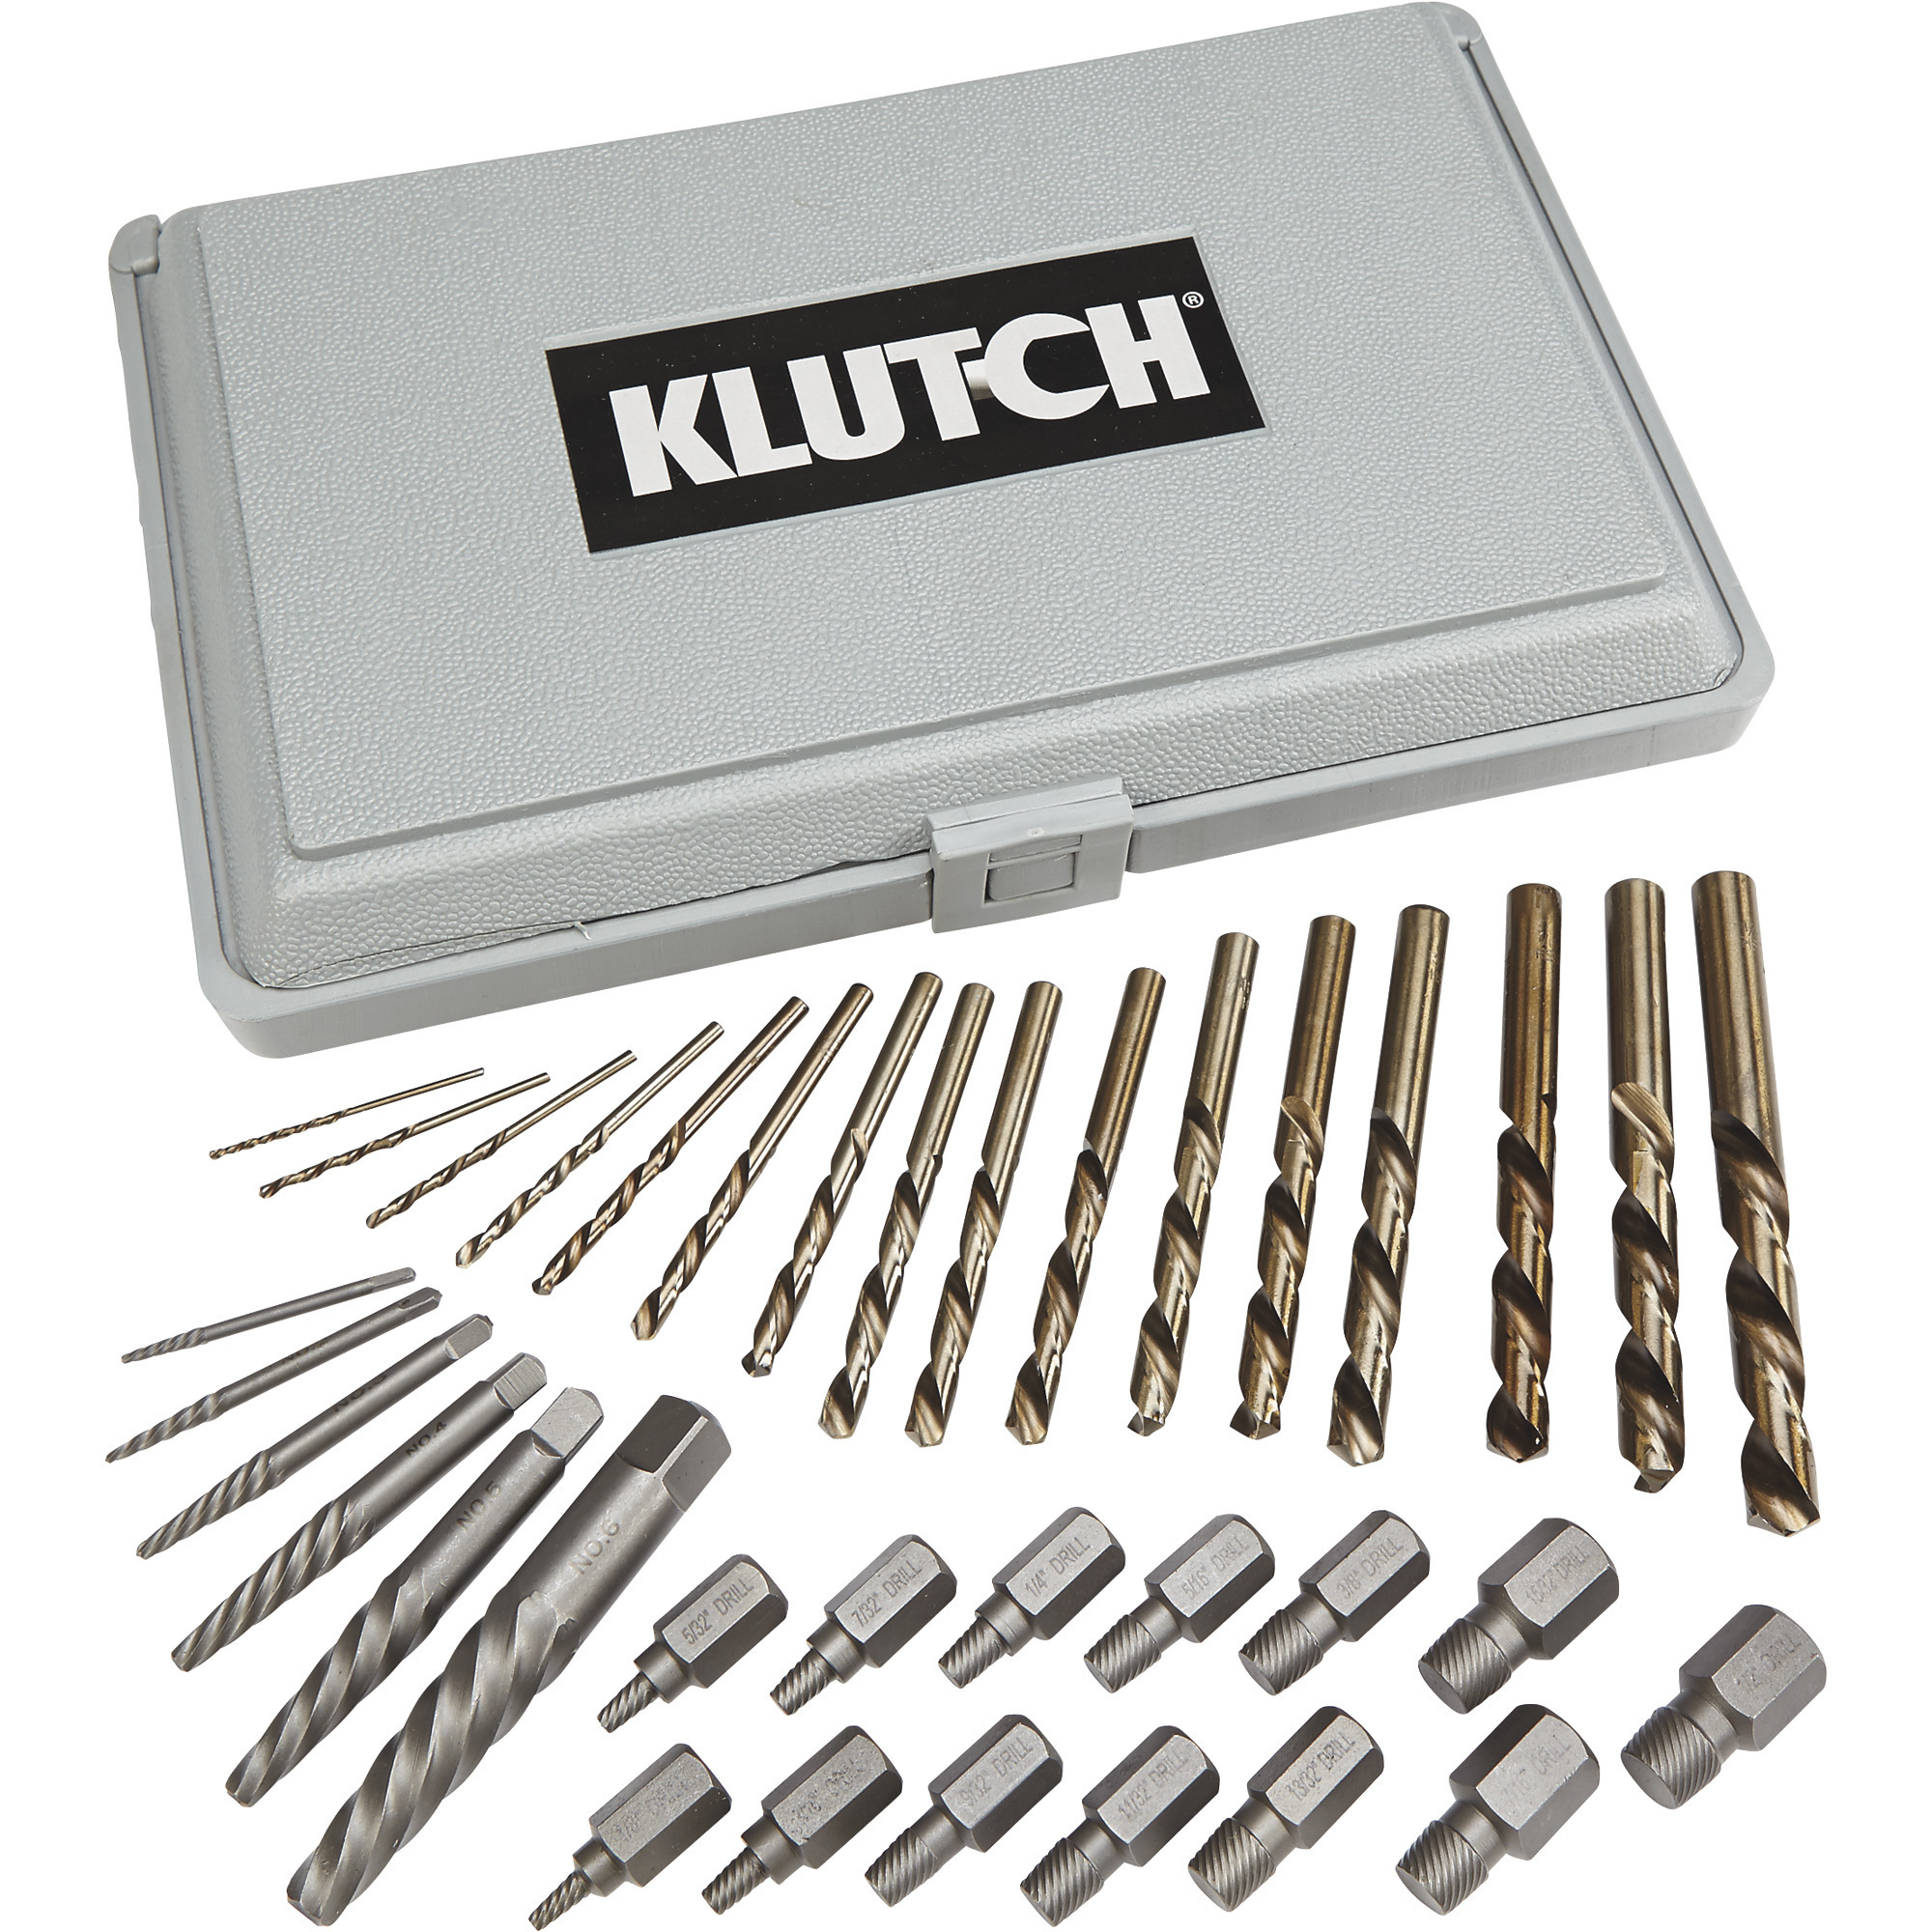 Klutch Screw Extractor and Drill Bit Set, 35-Piece